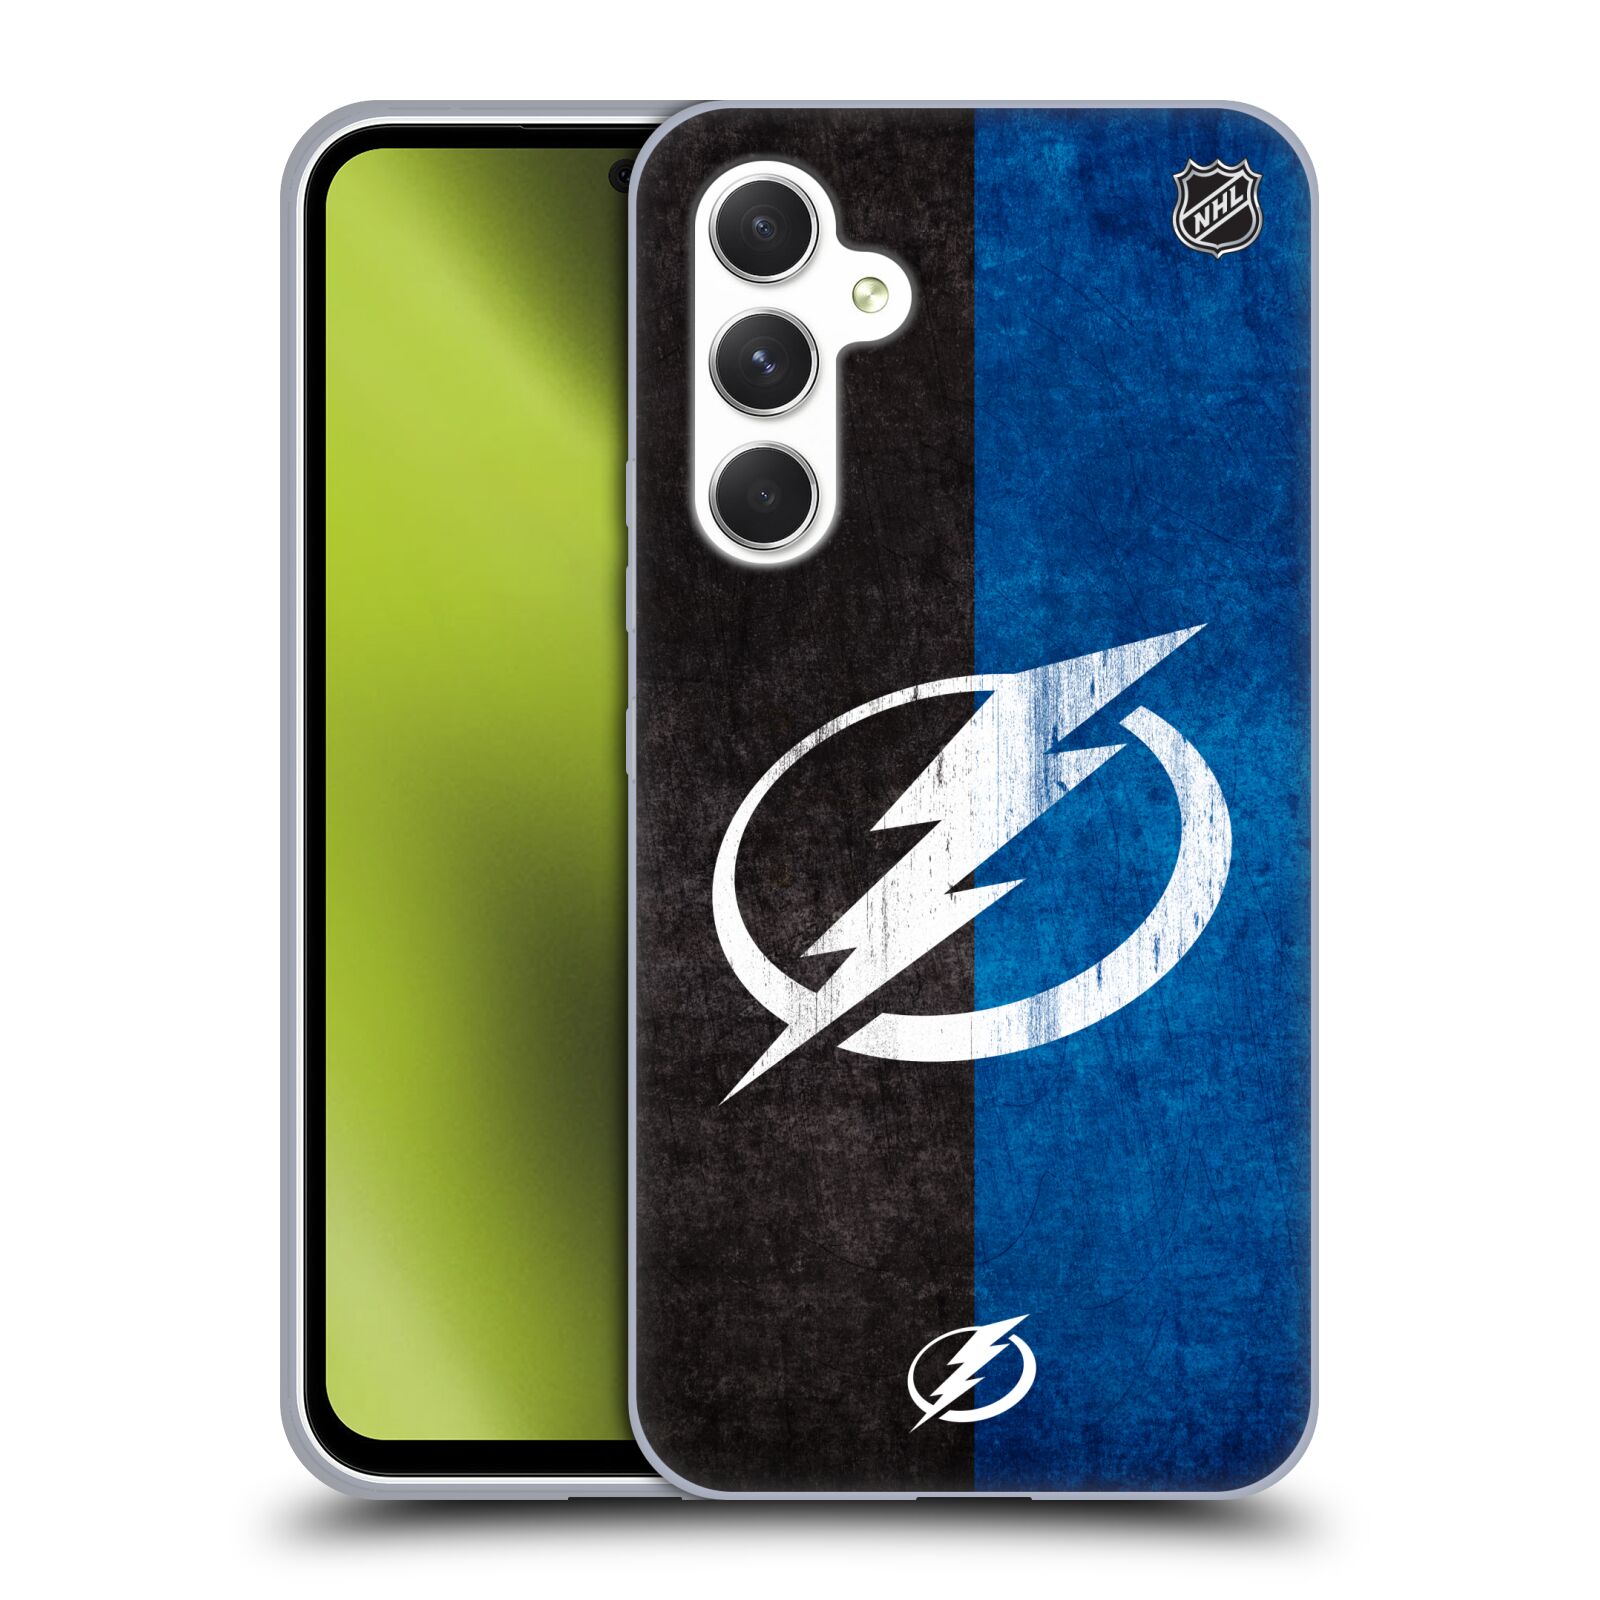 Silikonové pouzdro na mobil Samsung Galaxy A54 5G - NHL - Půlené logo Tampa Bay Lightning (Silikonový kryt, obal, pouzdro na mobilní telefon Samsung Galaxy A54 5G s licencovaným motivem NHL - Půlené logo Tampa Bay Lightning)